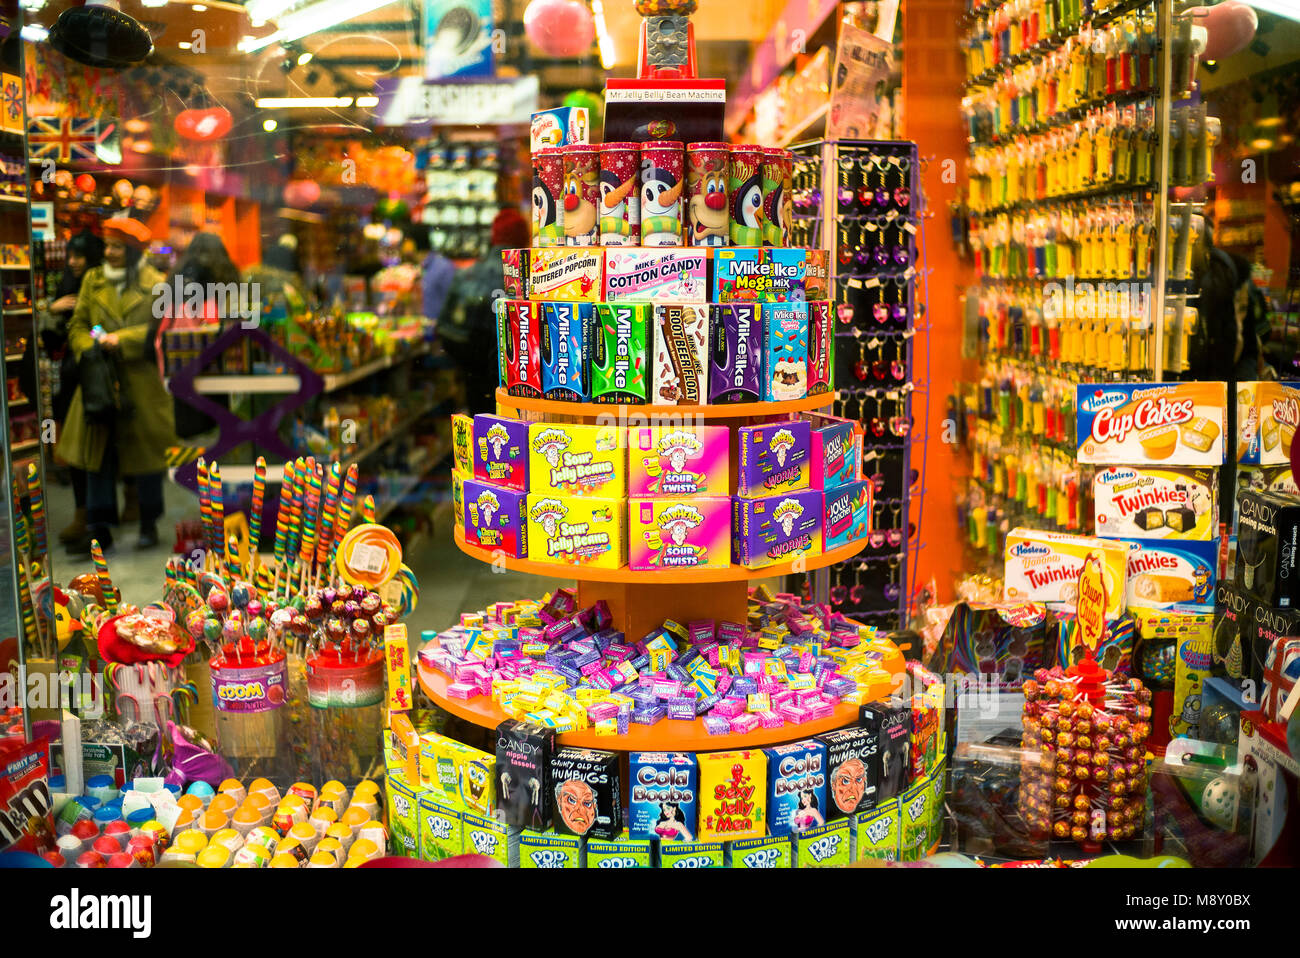 American Candy Co ,Sweet candy shop interior, Camden market London UK Stock Photo